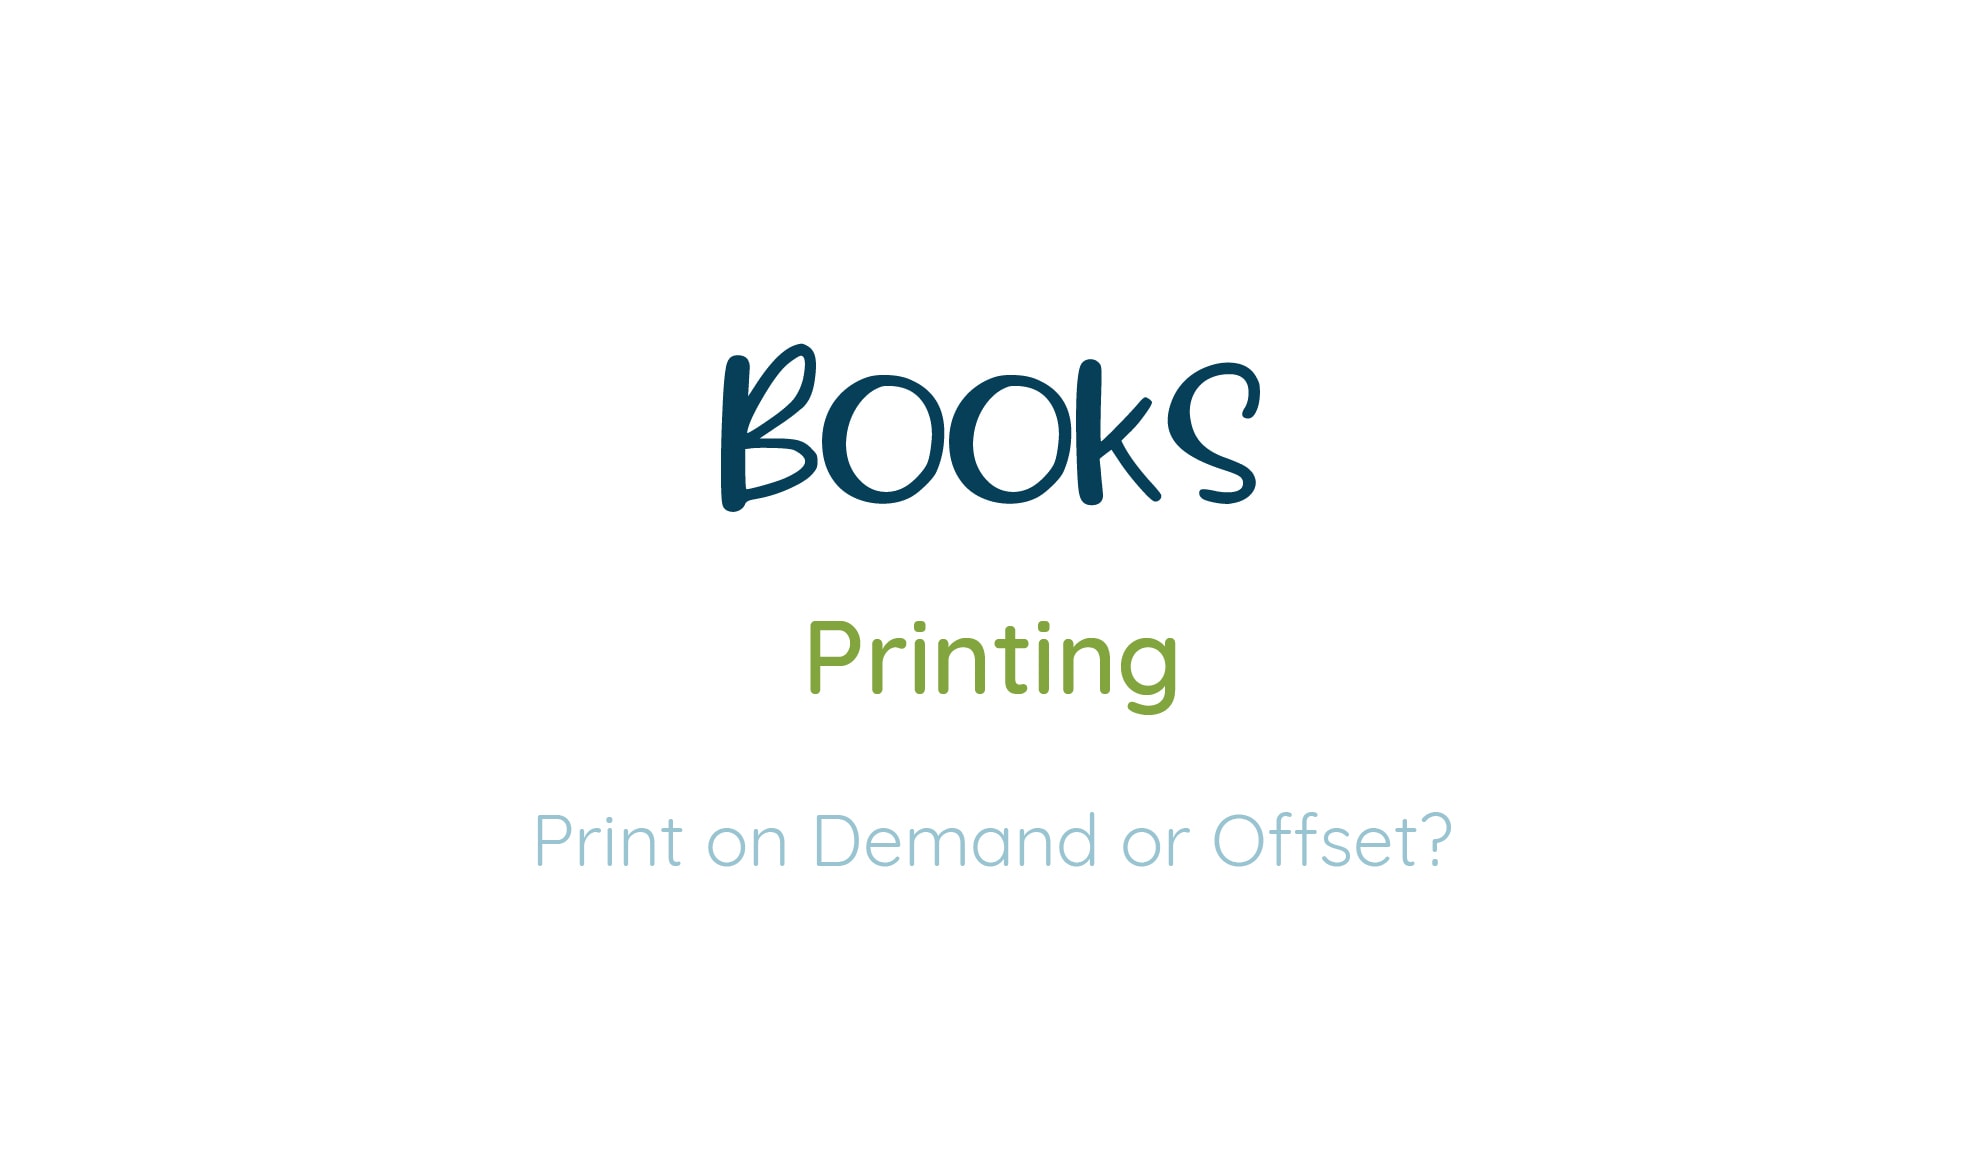 Books Printing